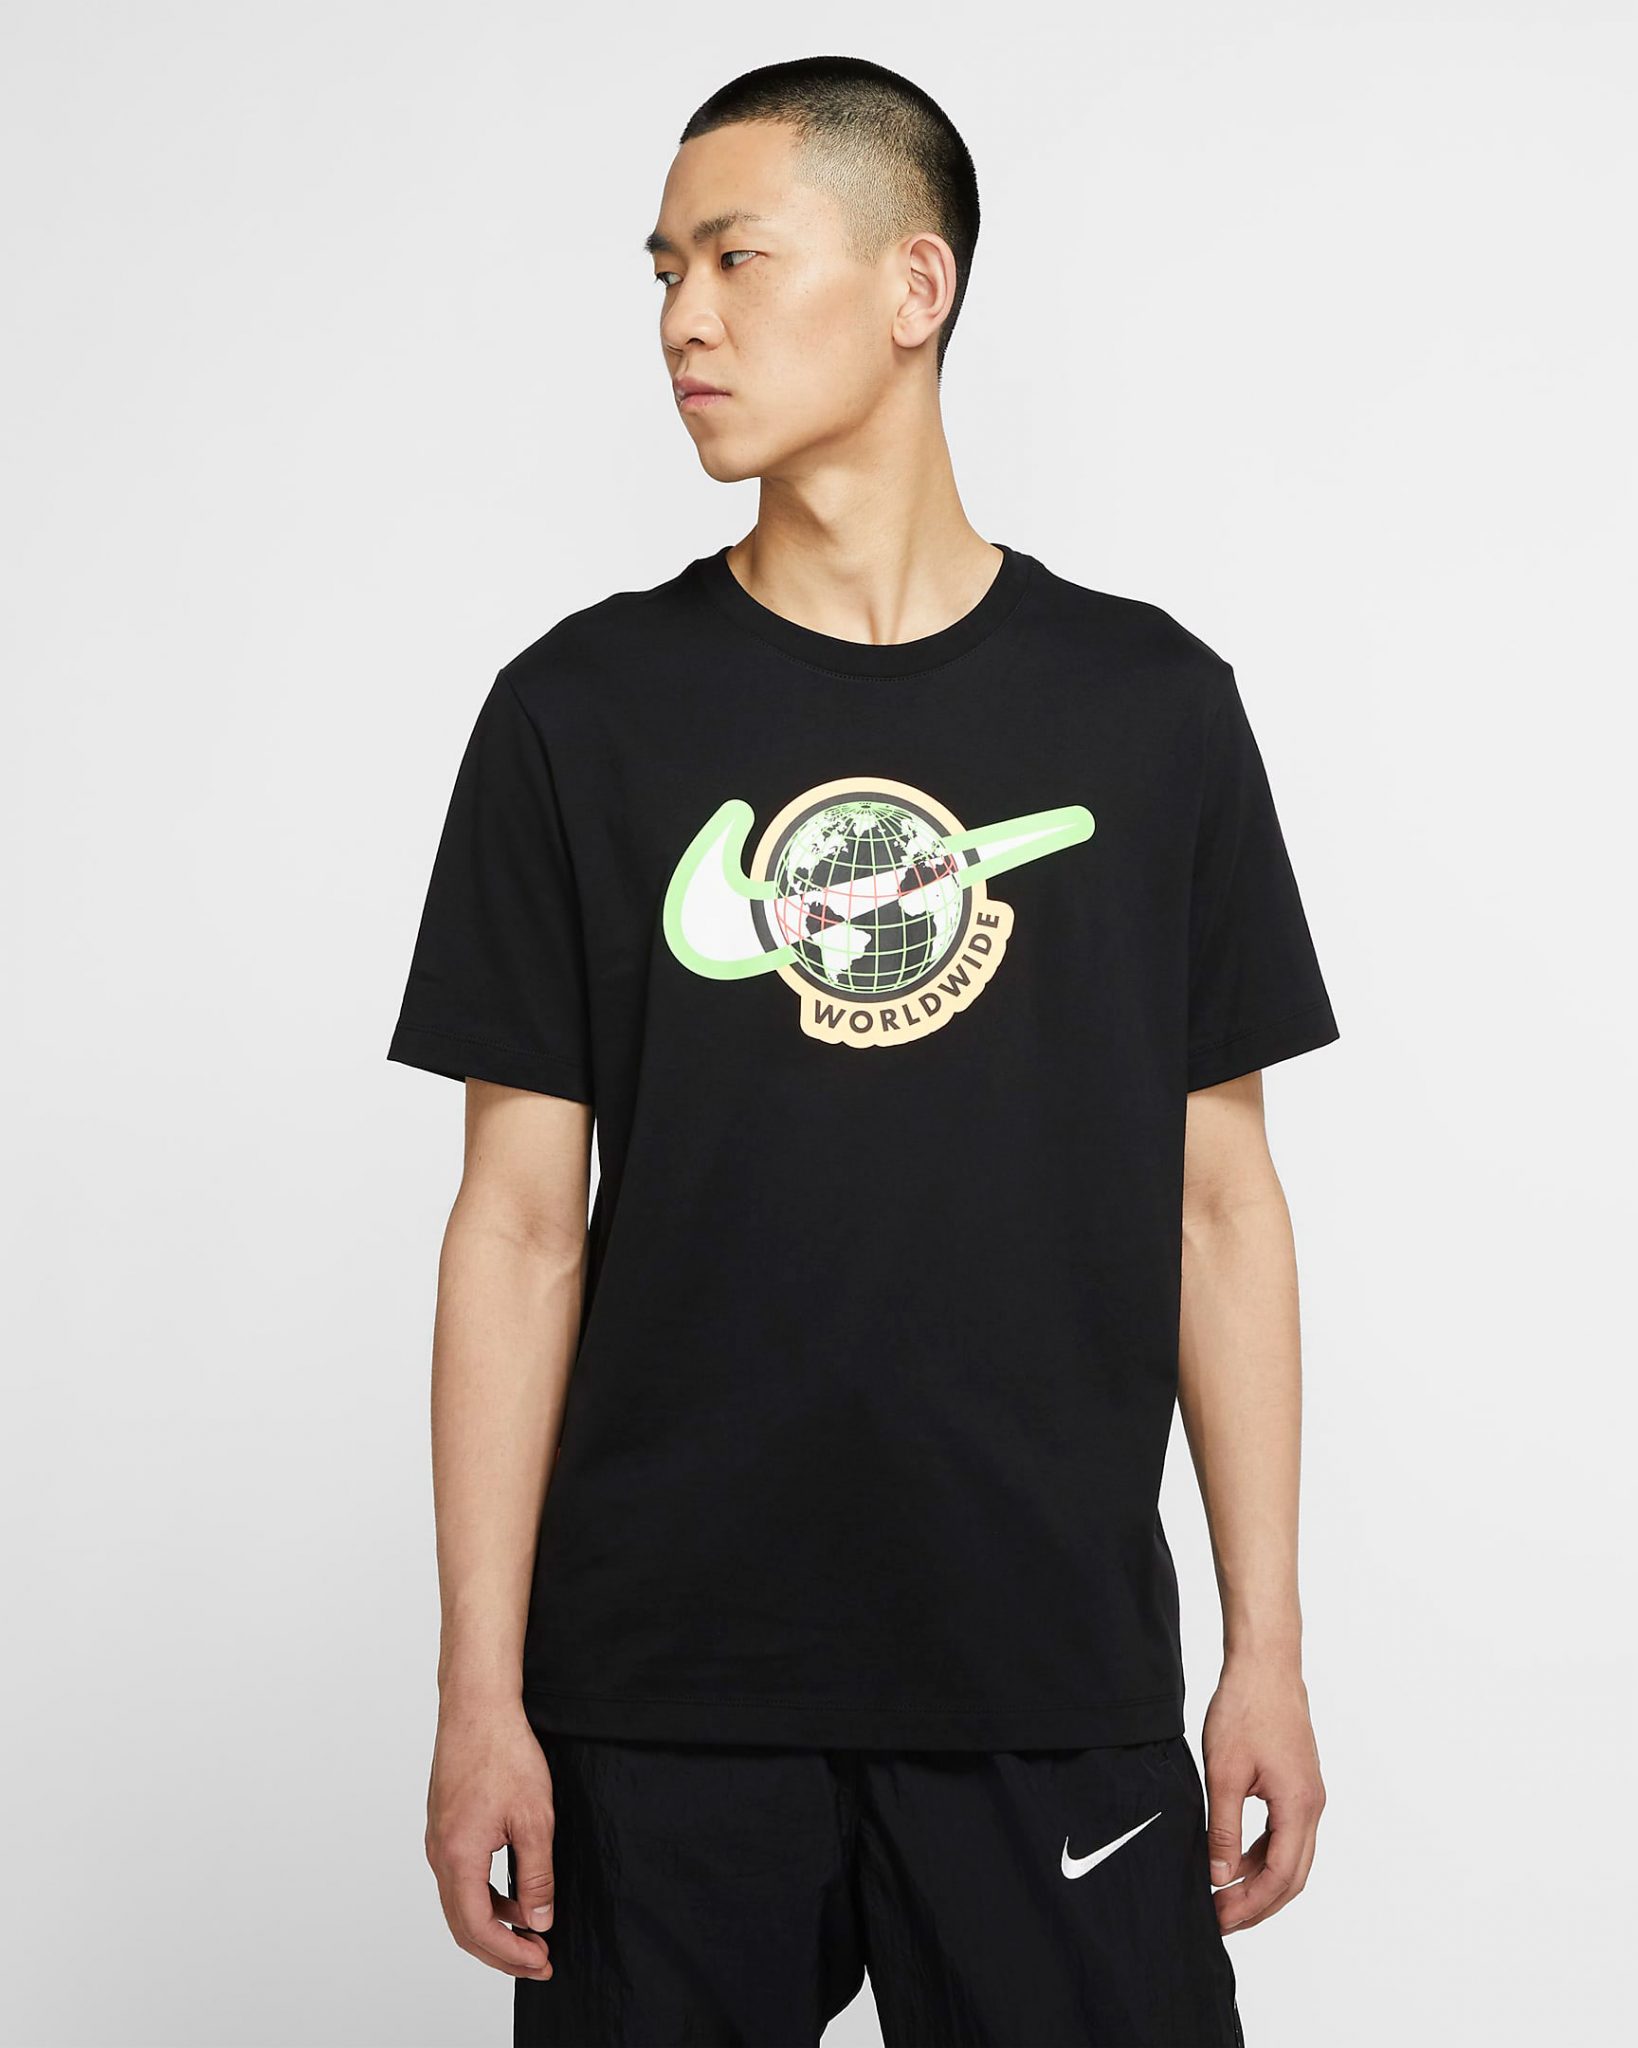 Nike Worldwide Shirts | SneakerFits.com